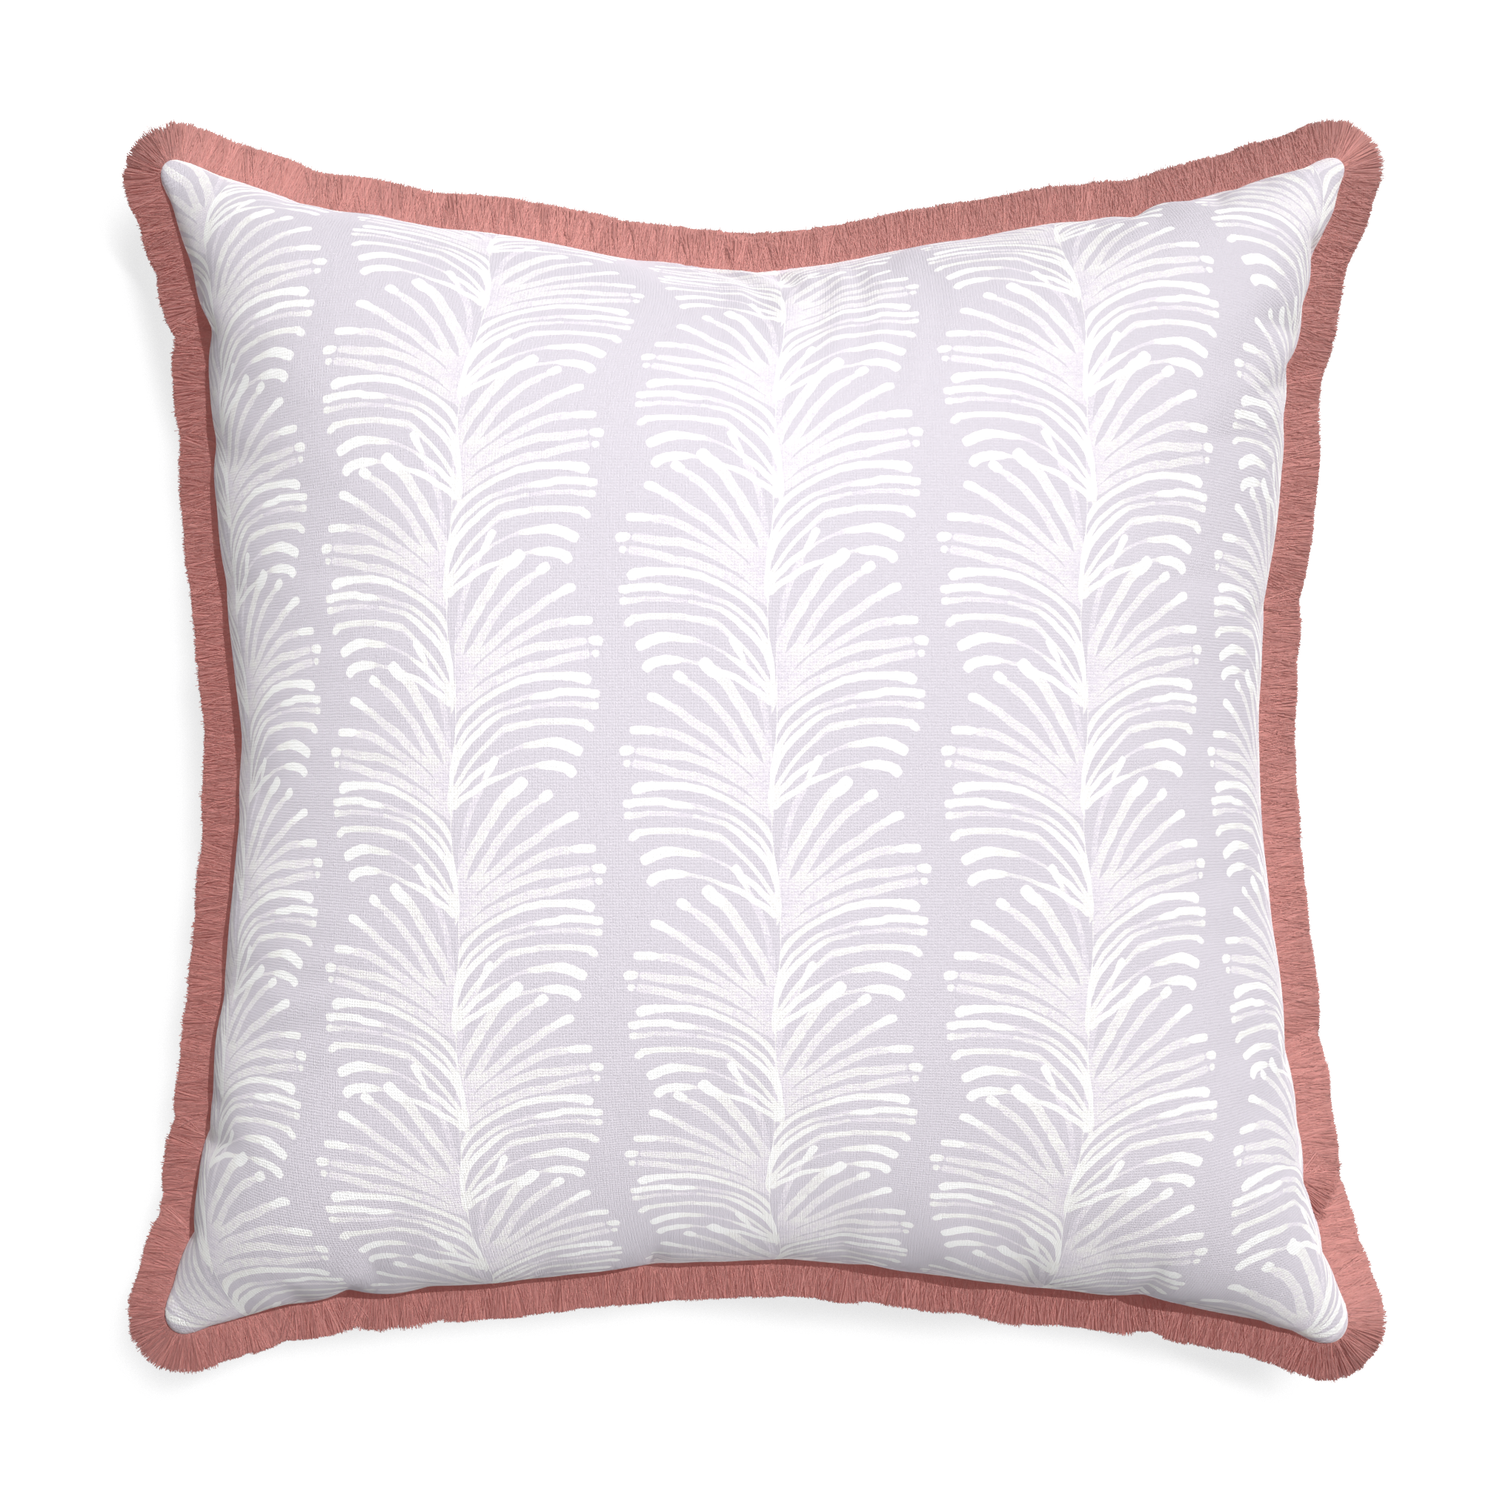 Euro-sham emma lavender custom pillow with d fringe on white background